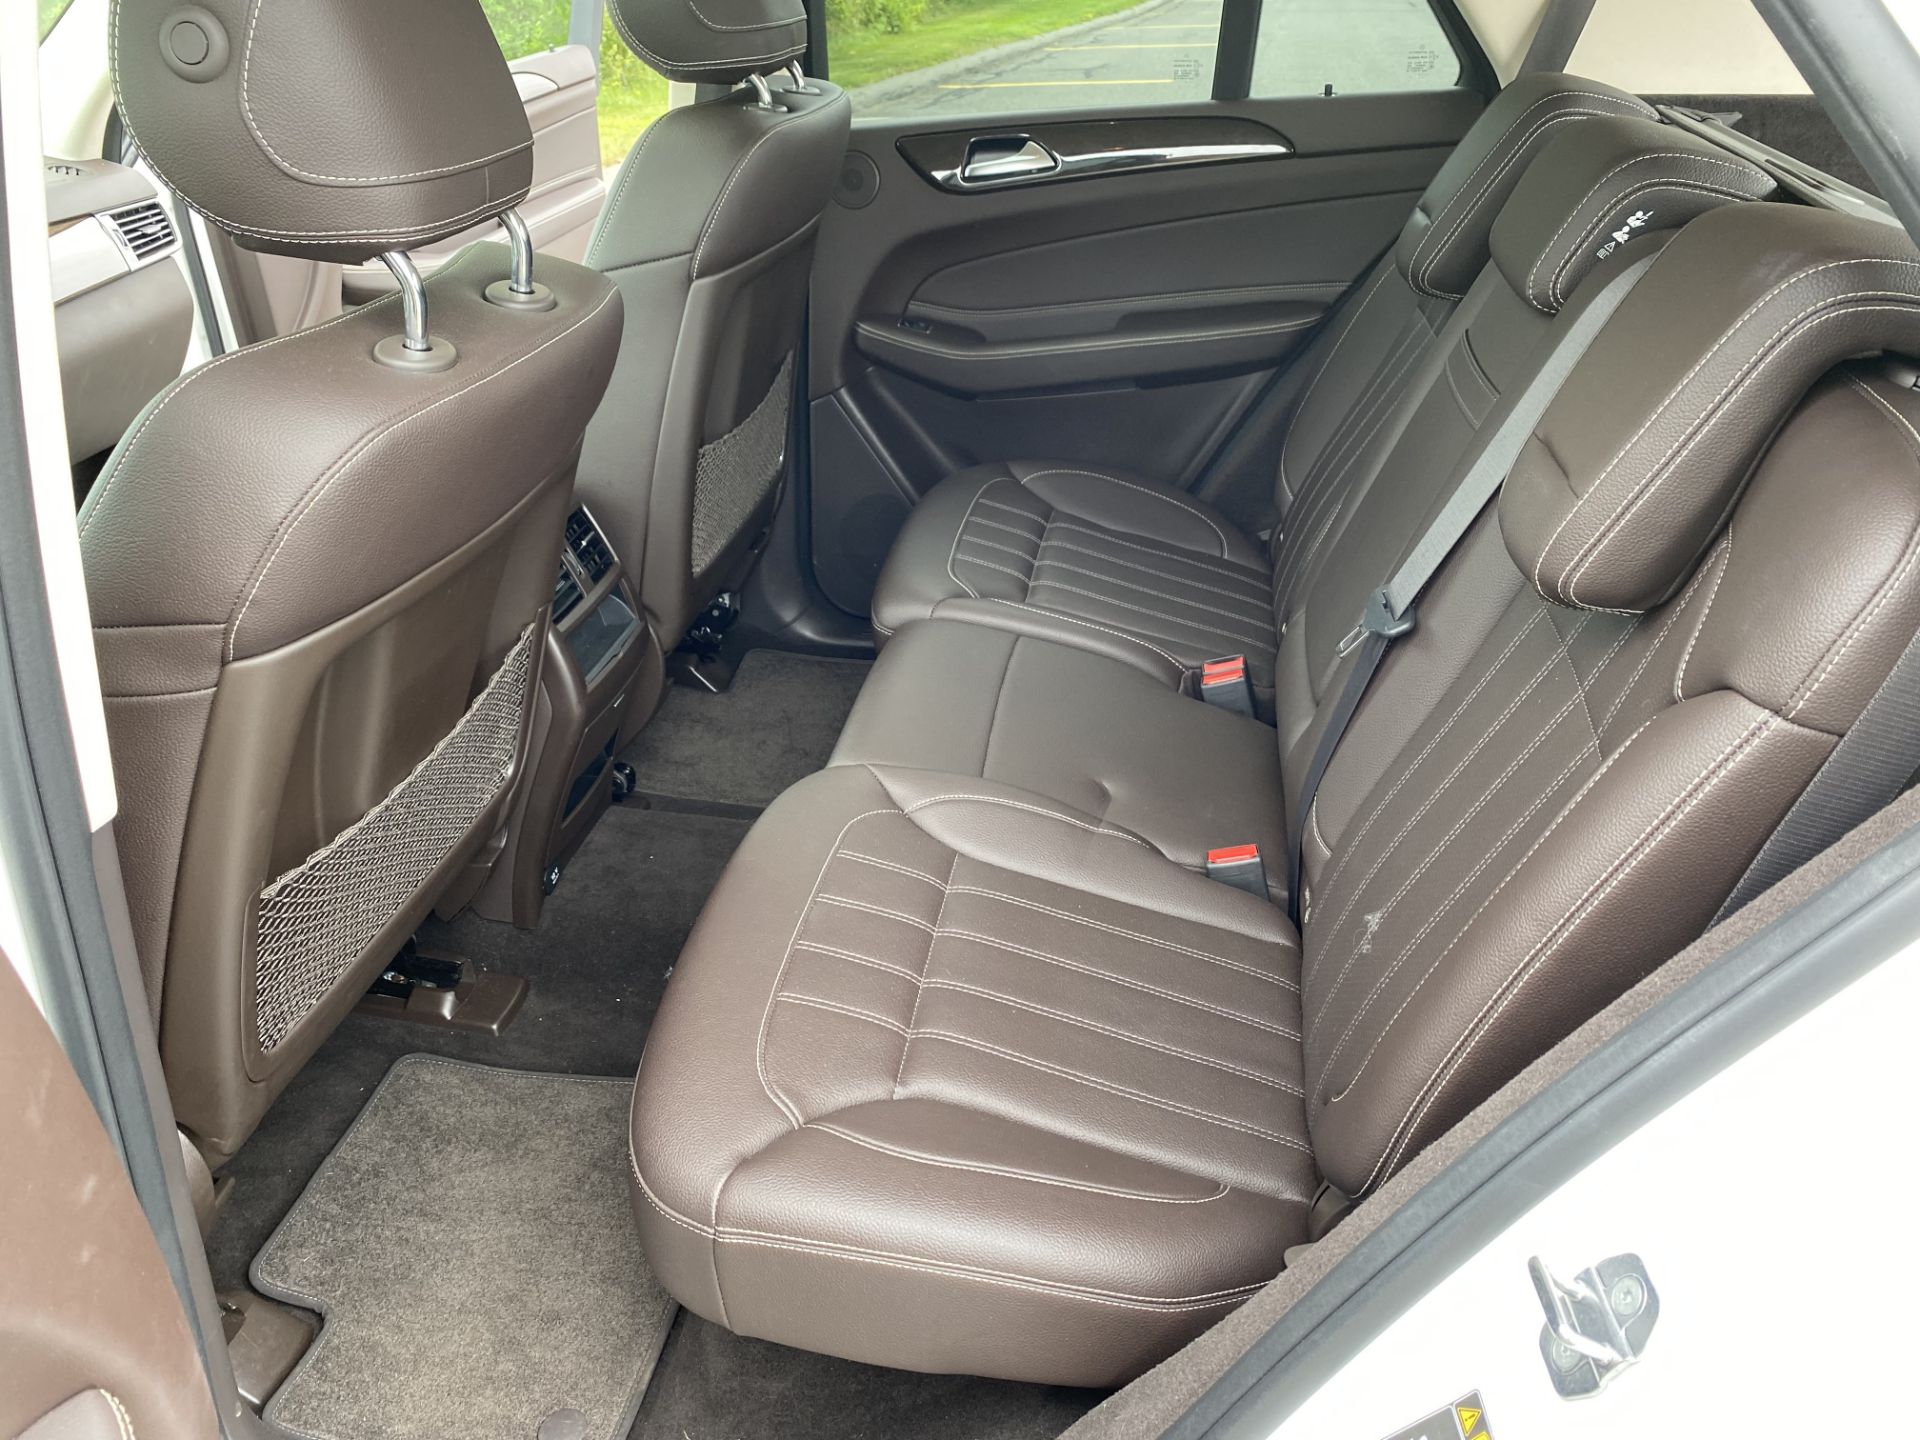 2018 Mercedes Benz GLE350, Odom: 52,420, VIN#: 4JGDA5HBXJB144786, Leather Interior, Power - Image 10 of 19